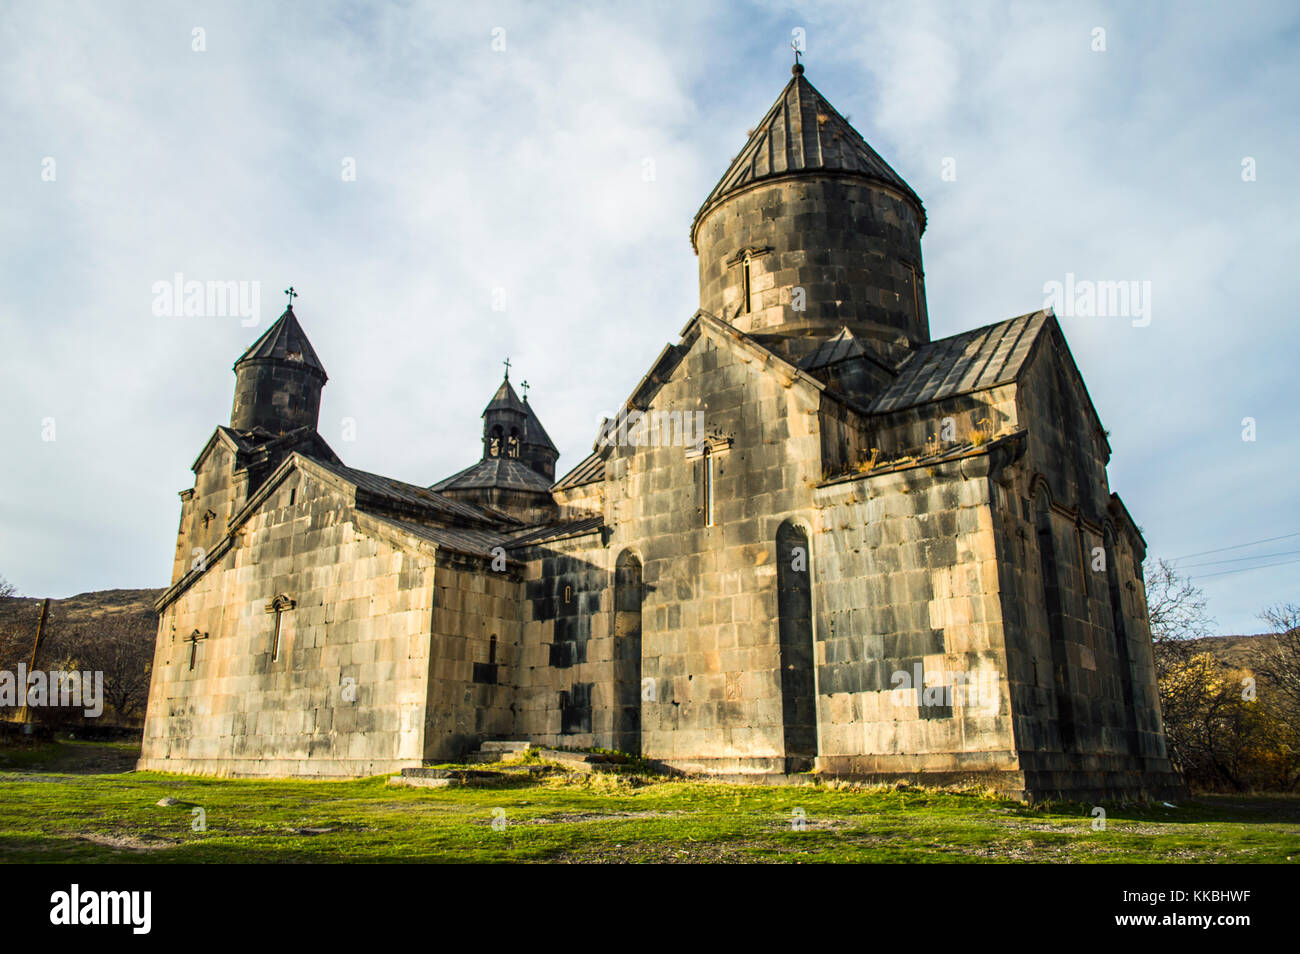 Tegher, Armenia - November 14, 2017: 13th century Tegher monastery in the village of Tegher, Armenia Stock Photo